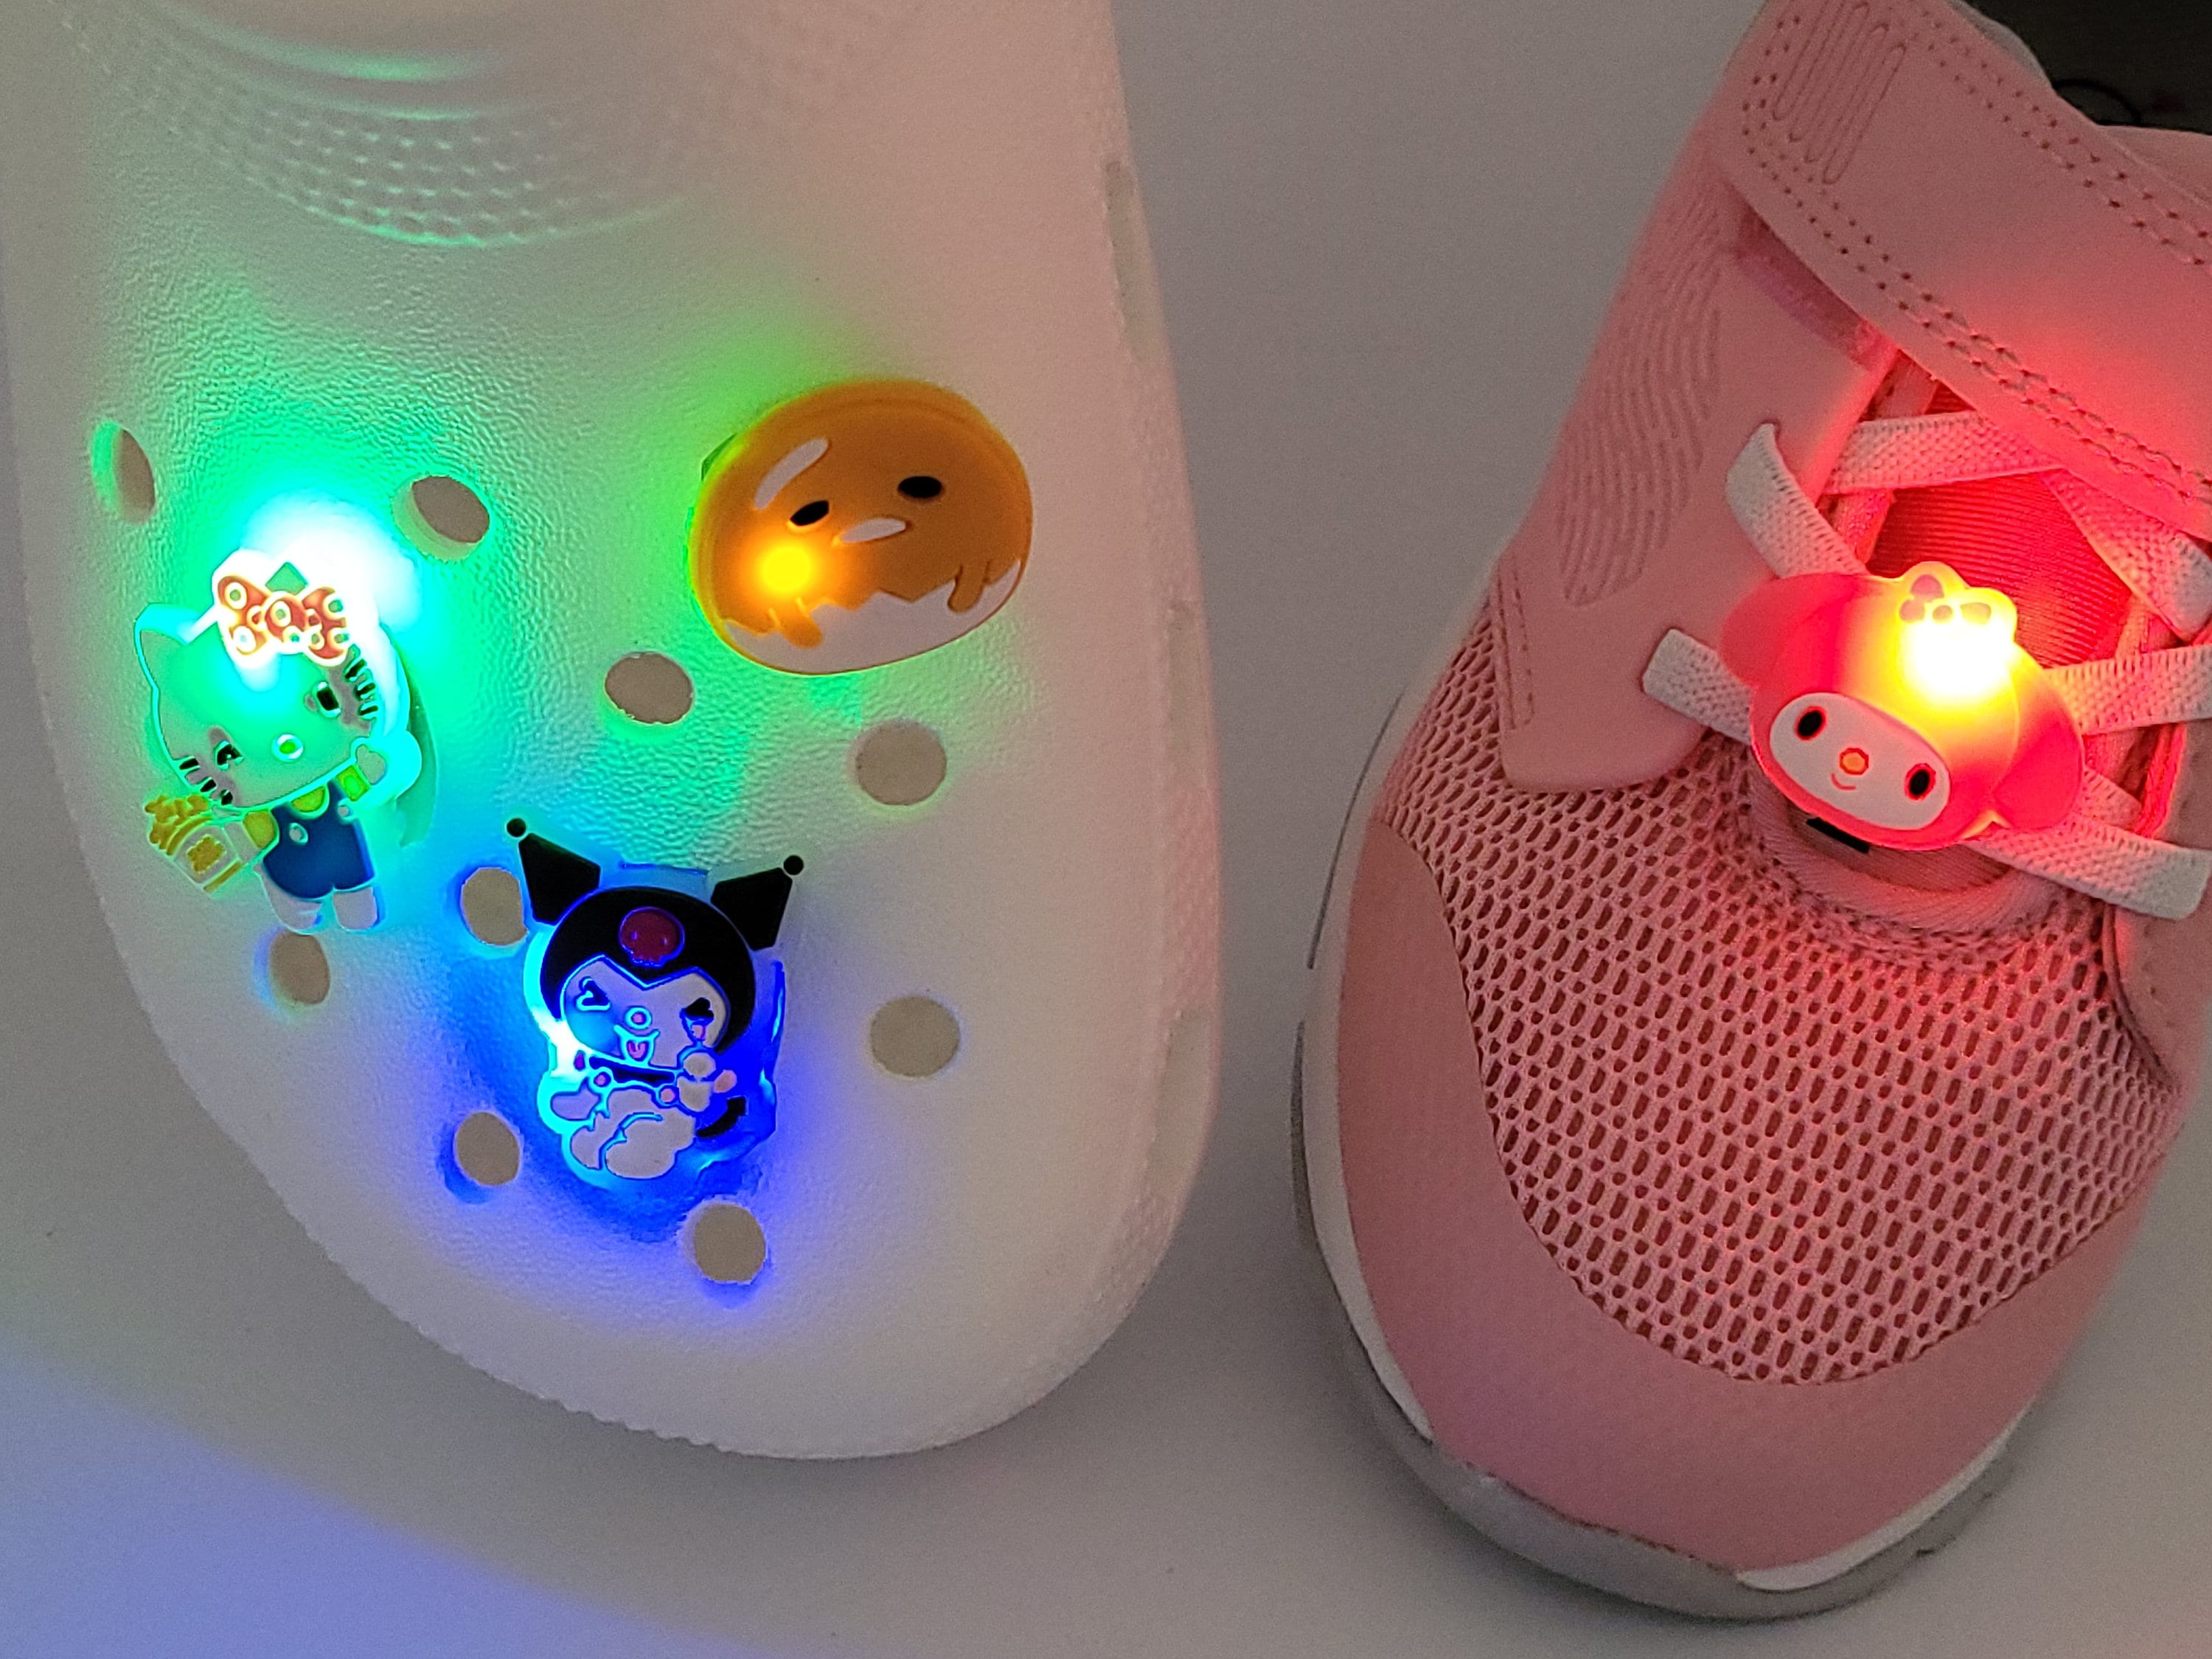 Pink Designer Electro Crocs With Designer Charms